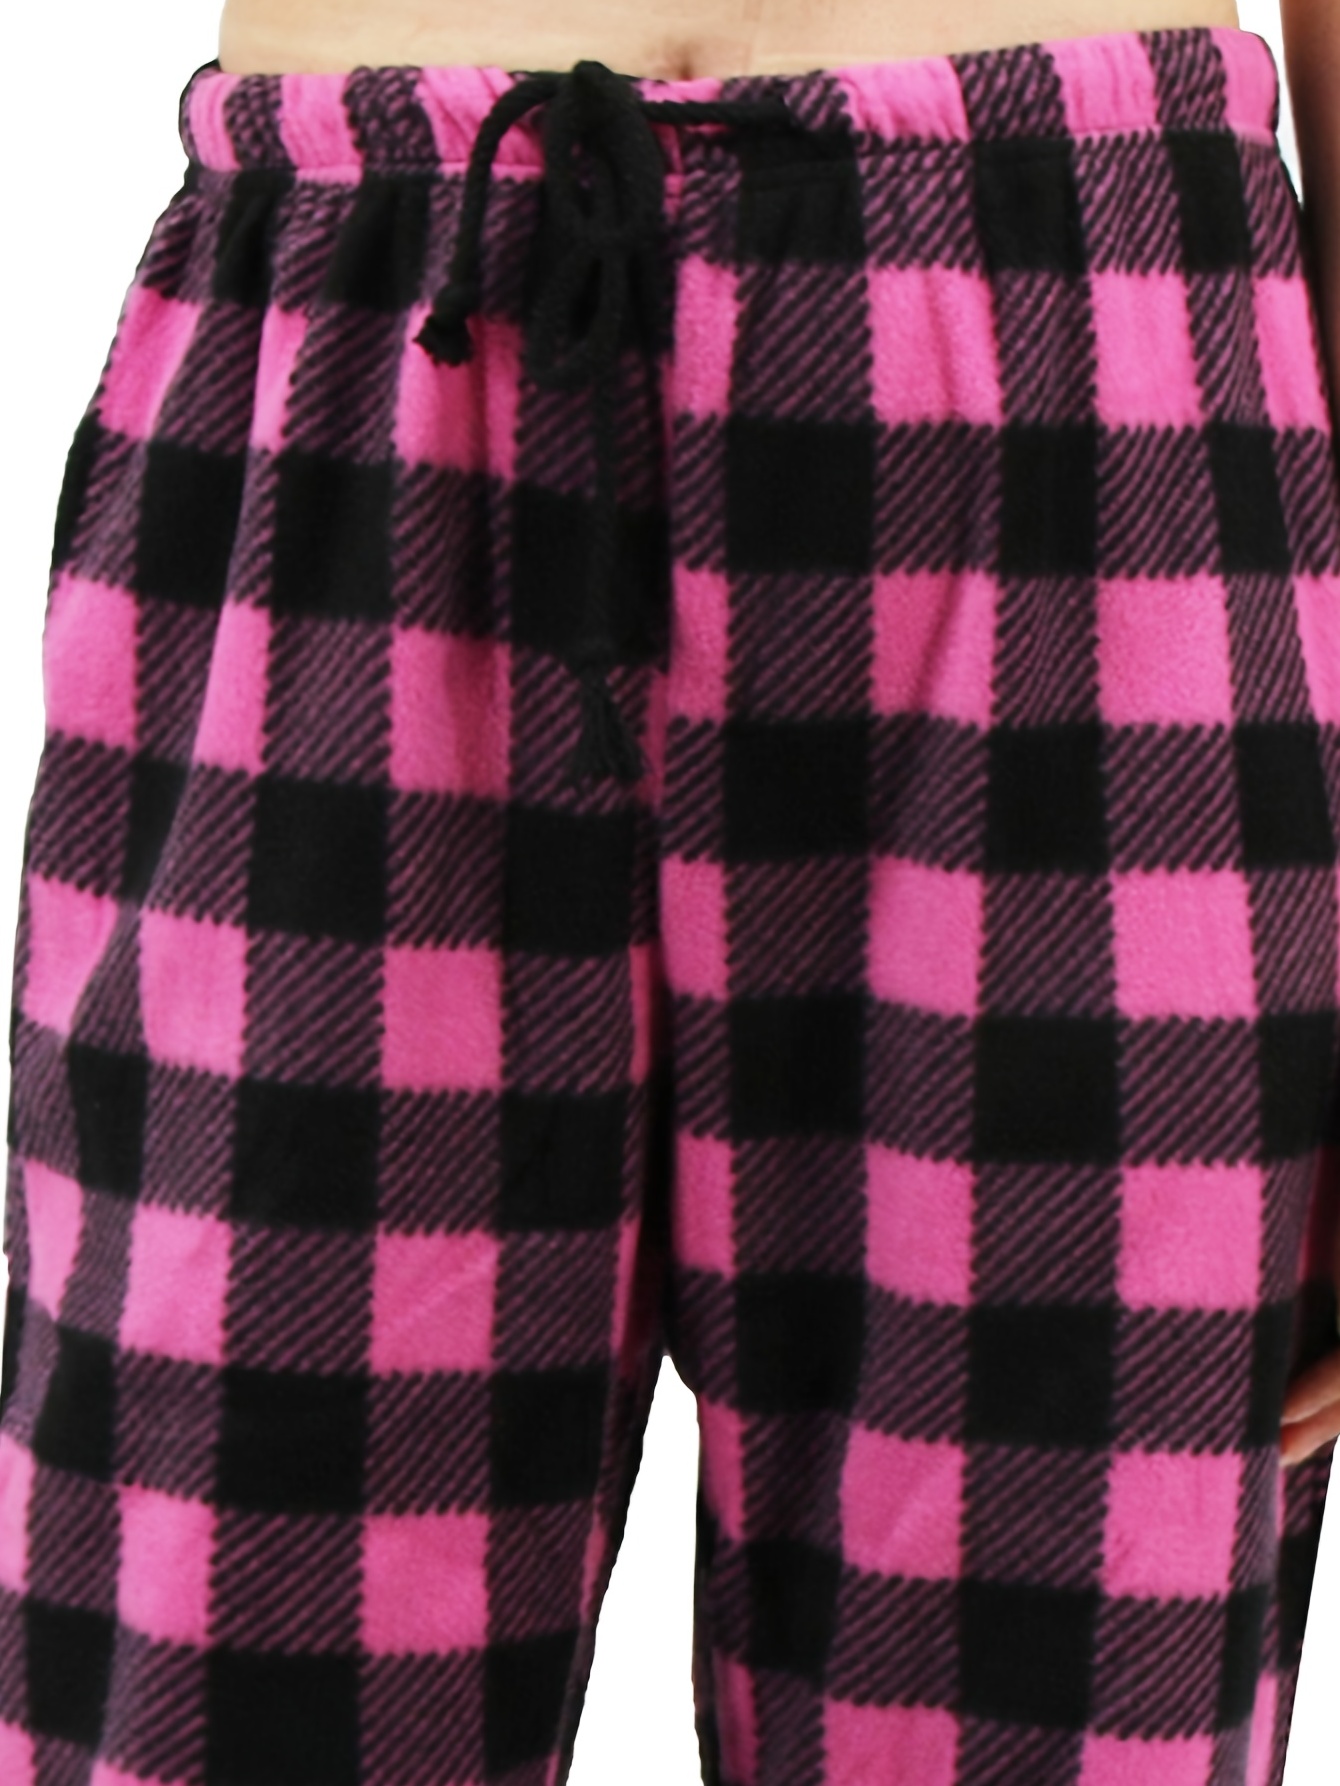 Women’s Flannel Pajama Pants - Ladies’ Soft Plaid Pajama Pants -  Comfortable pajama pants for women- Lounge Pants-Pack Of 3